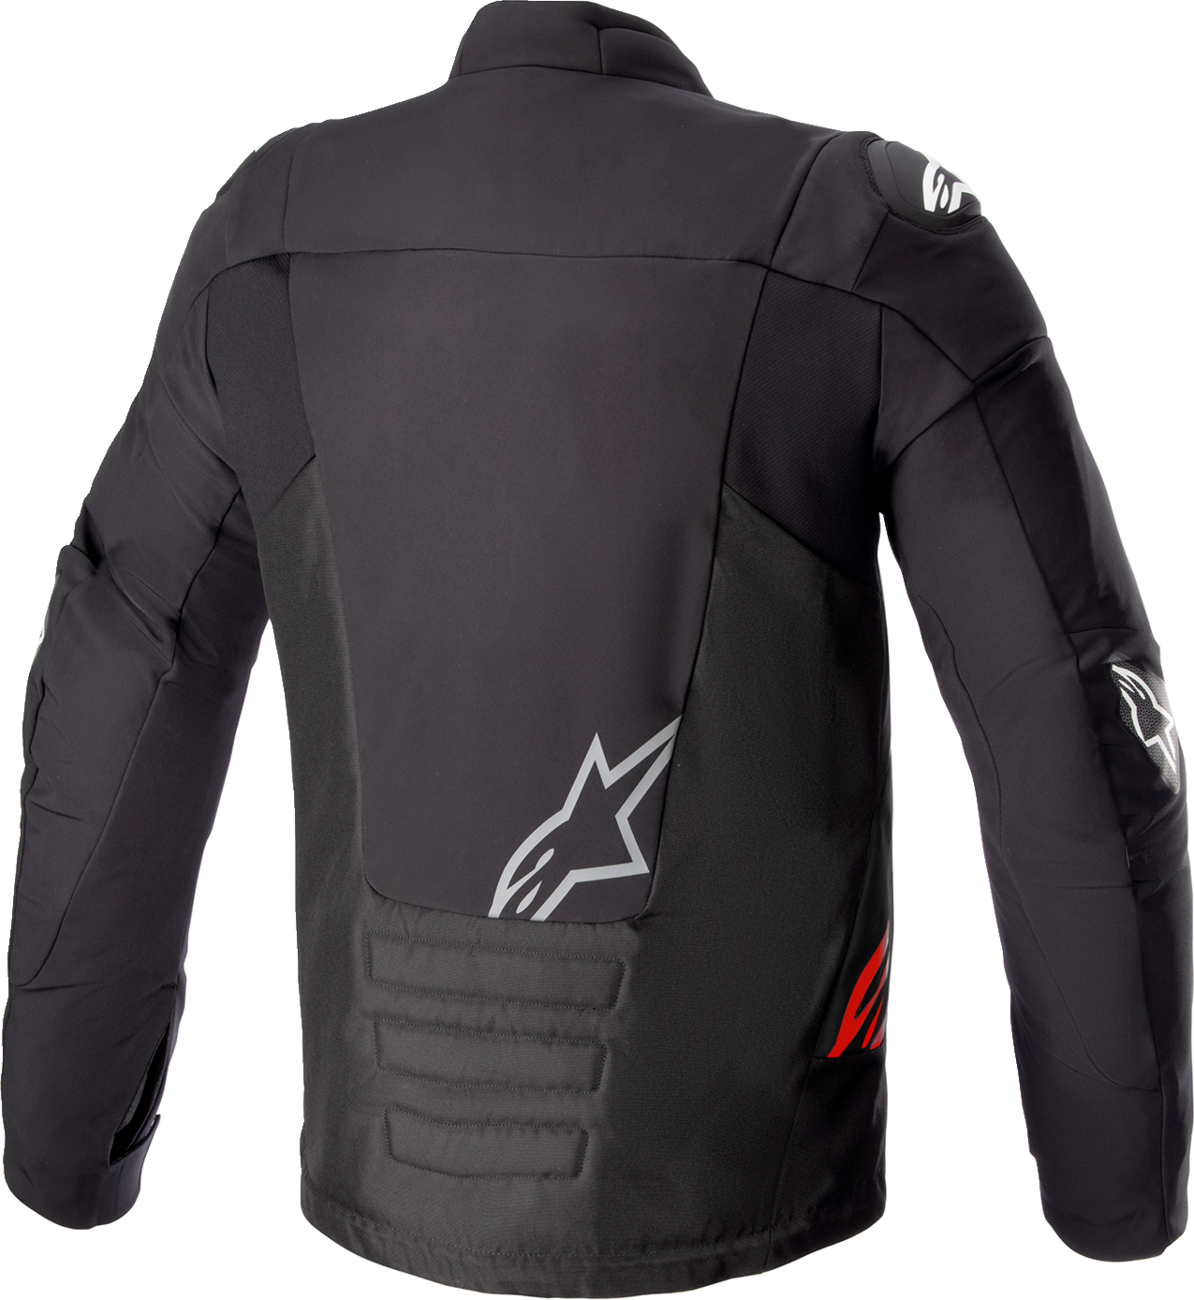 ALPINESTARS SMX Waterproof Jacket - Black/Gray/Red - Small 3206523-1993-S